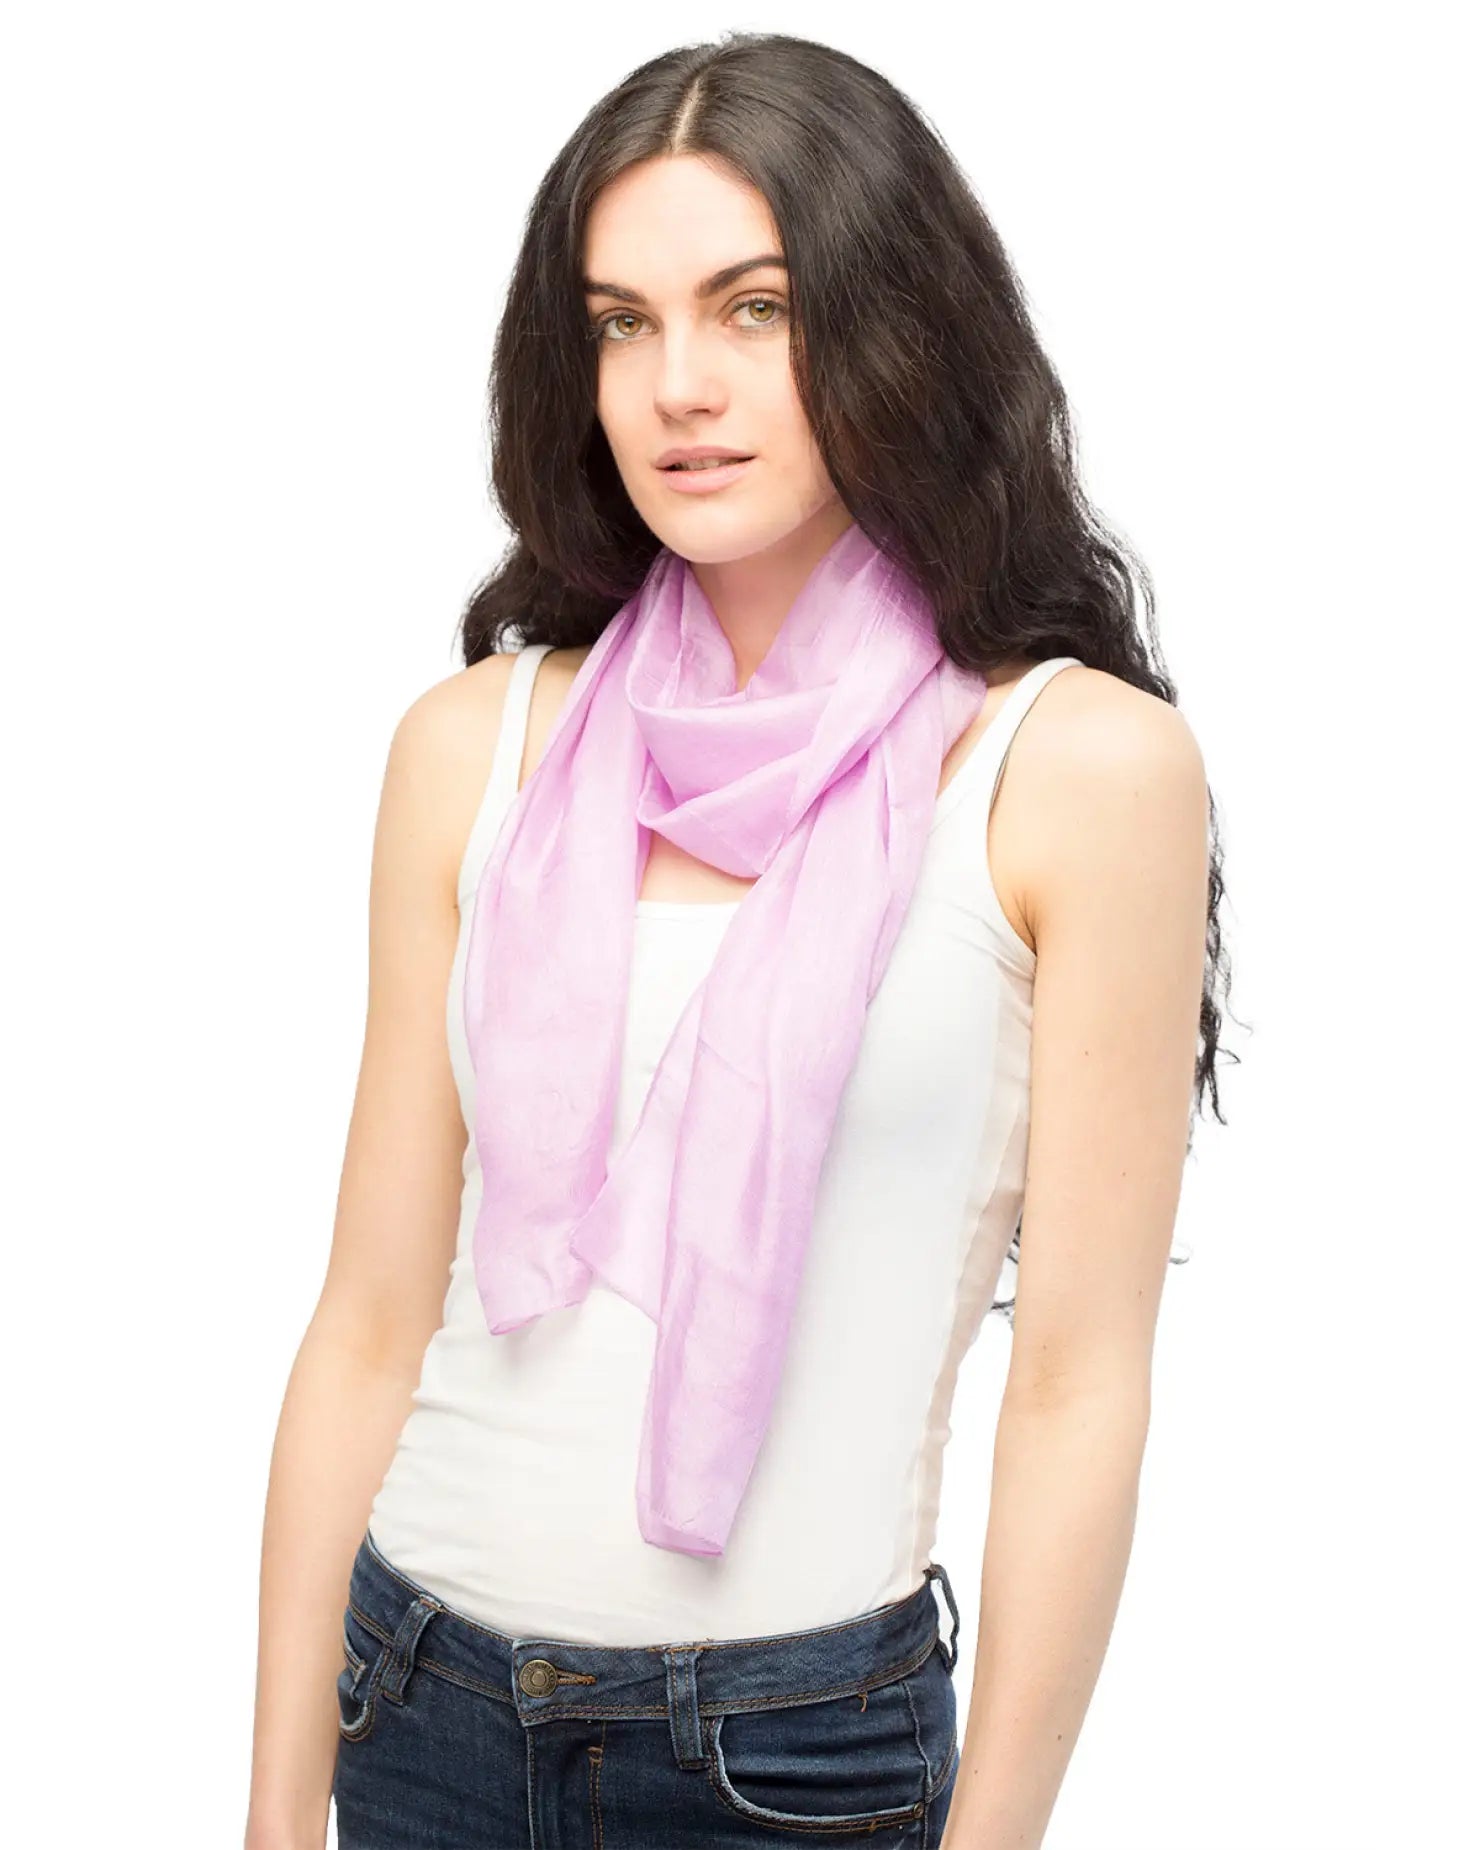 Pure silk lightweight scarf in pink being worn by woman